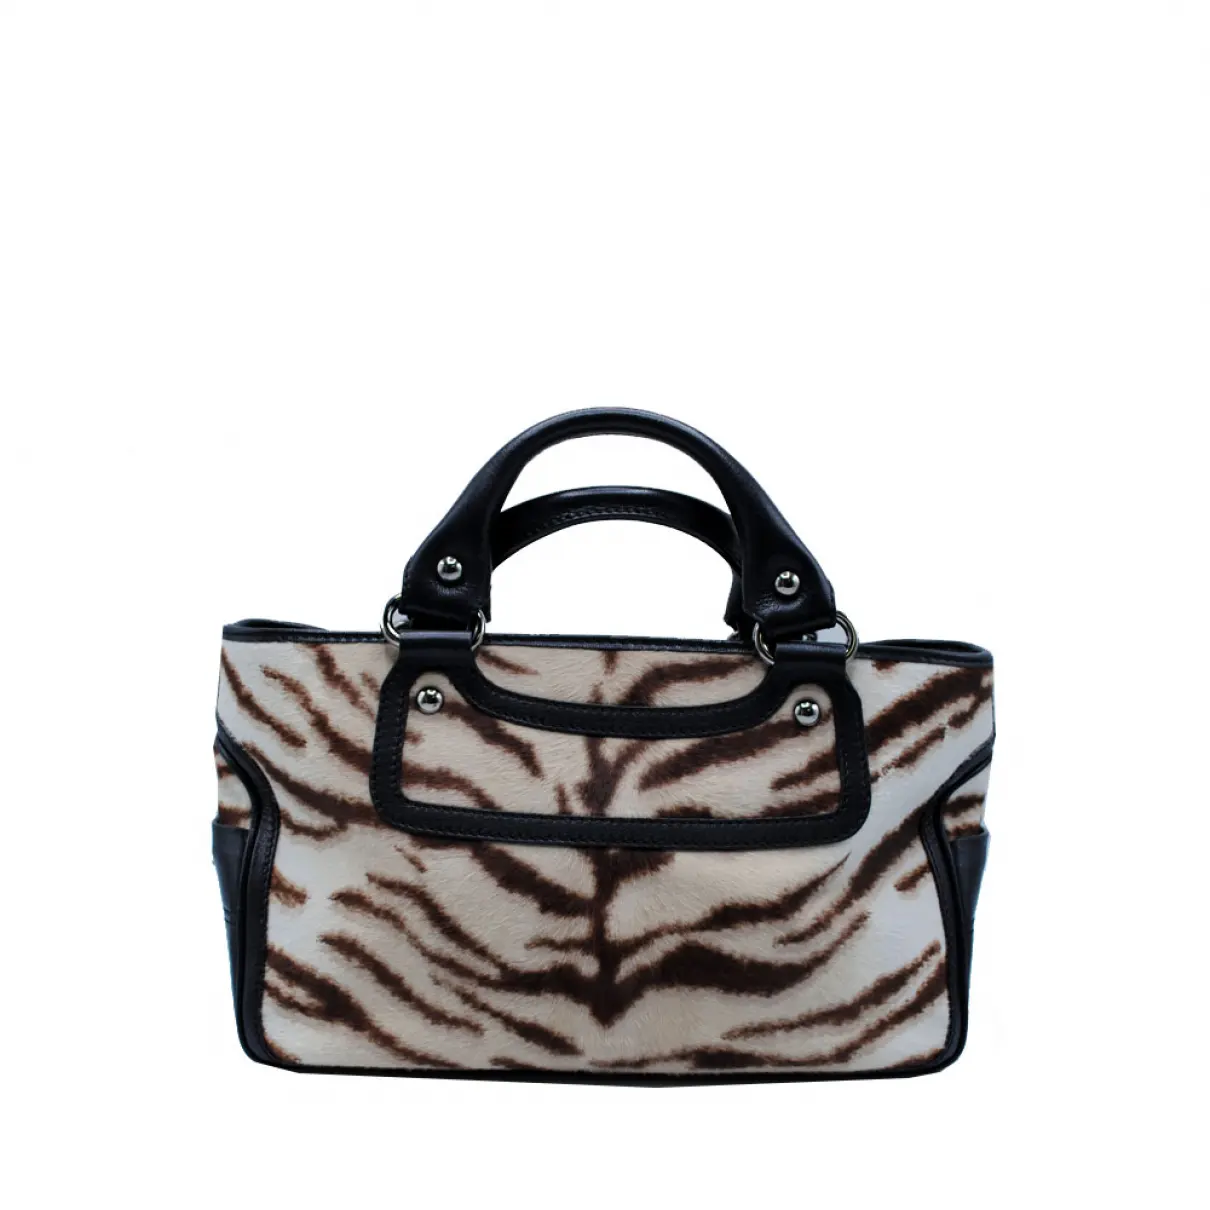 Buy Celine Boogie pony-style calfskin handbag online